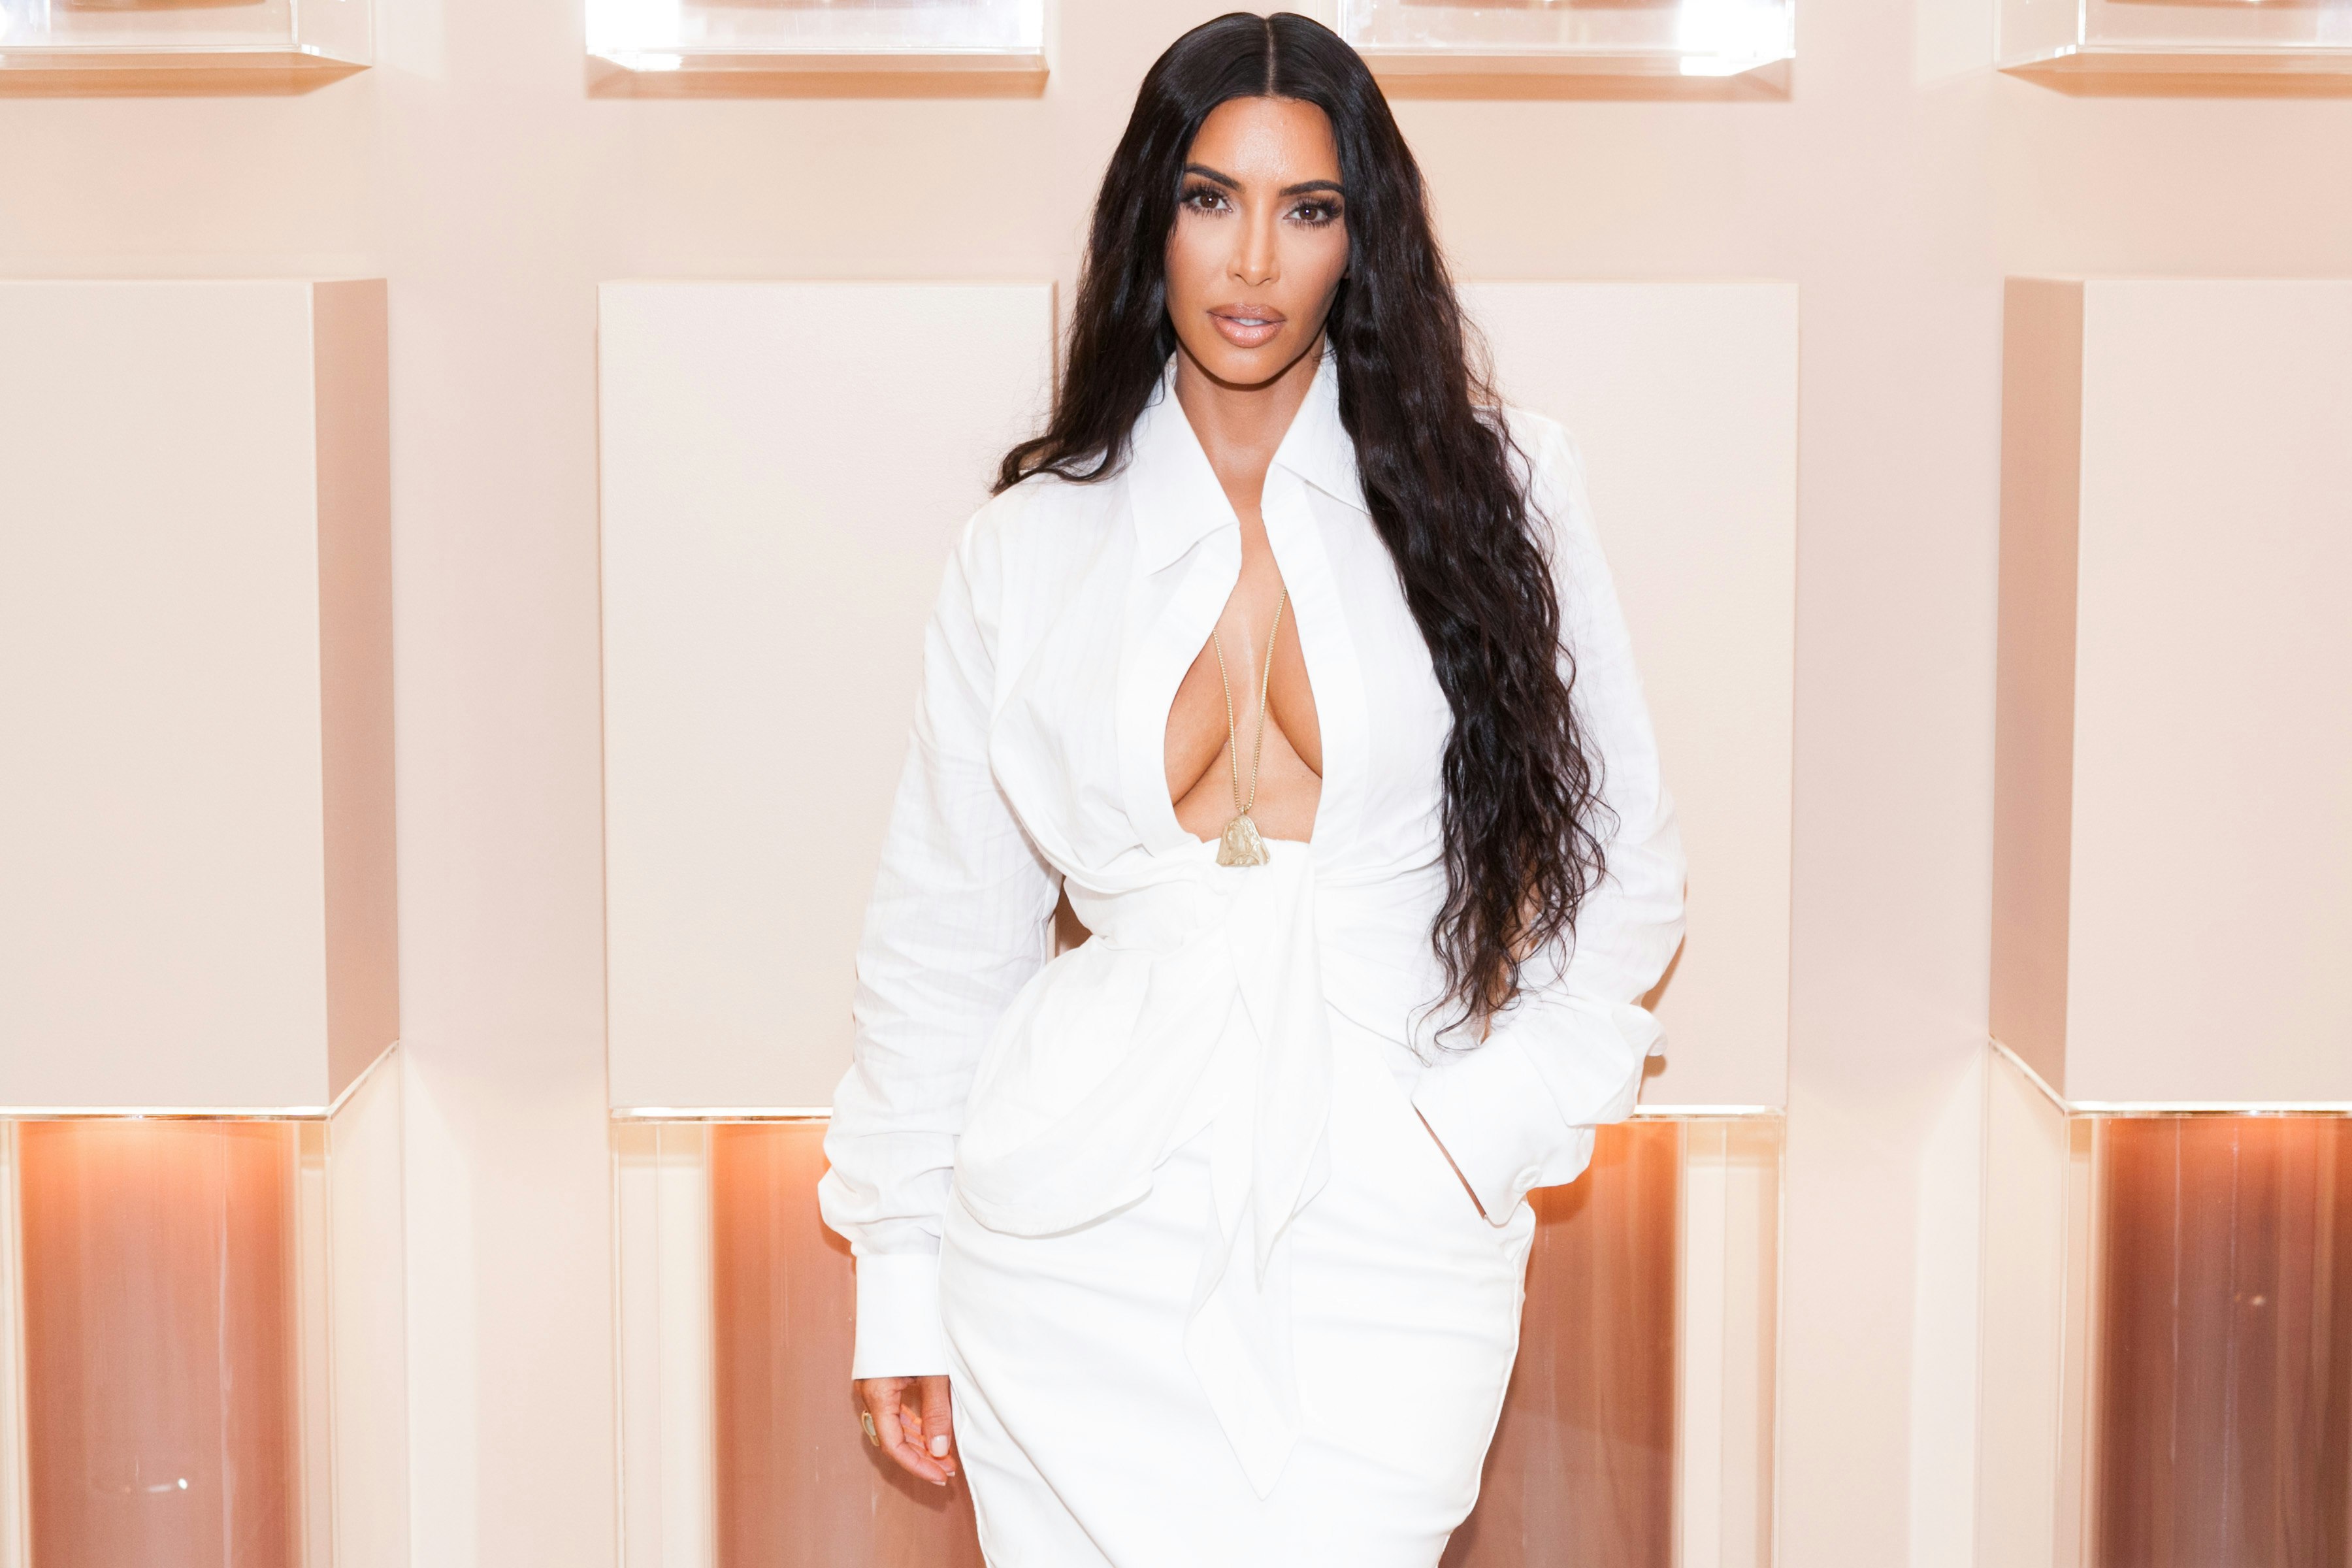 Kim Kardashian West: We Need A Break, A Minute To Regroup